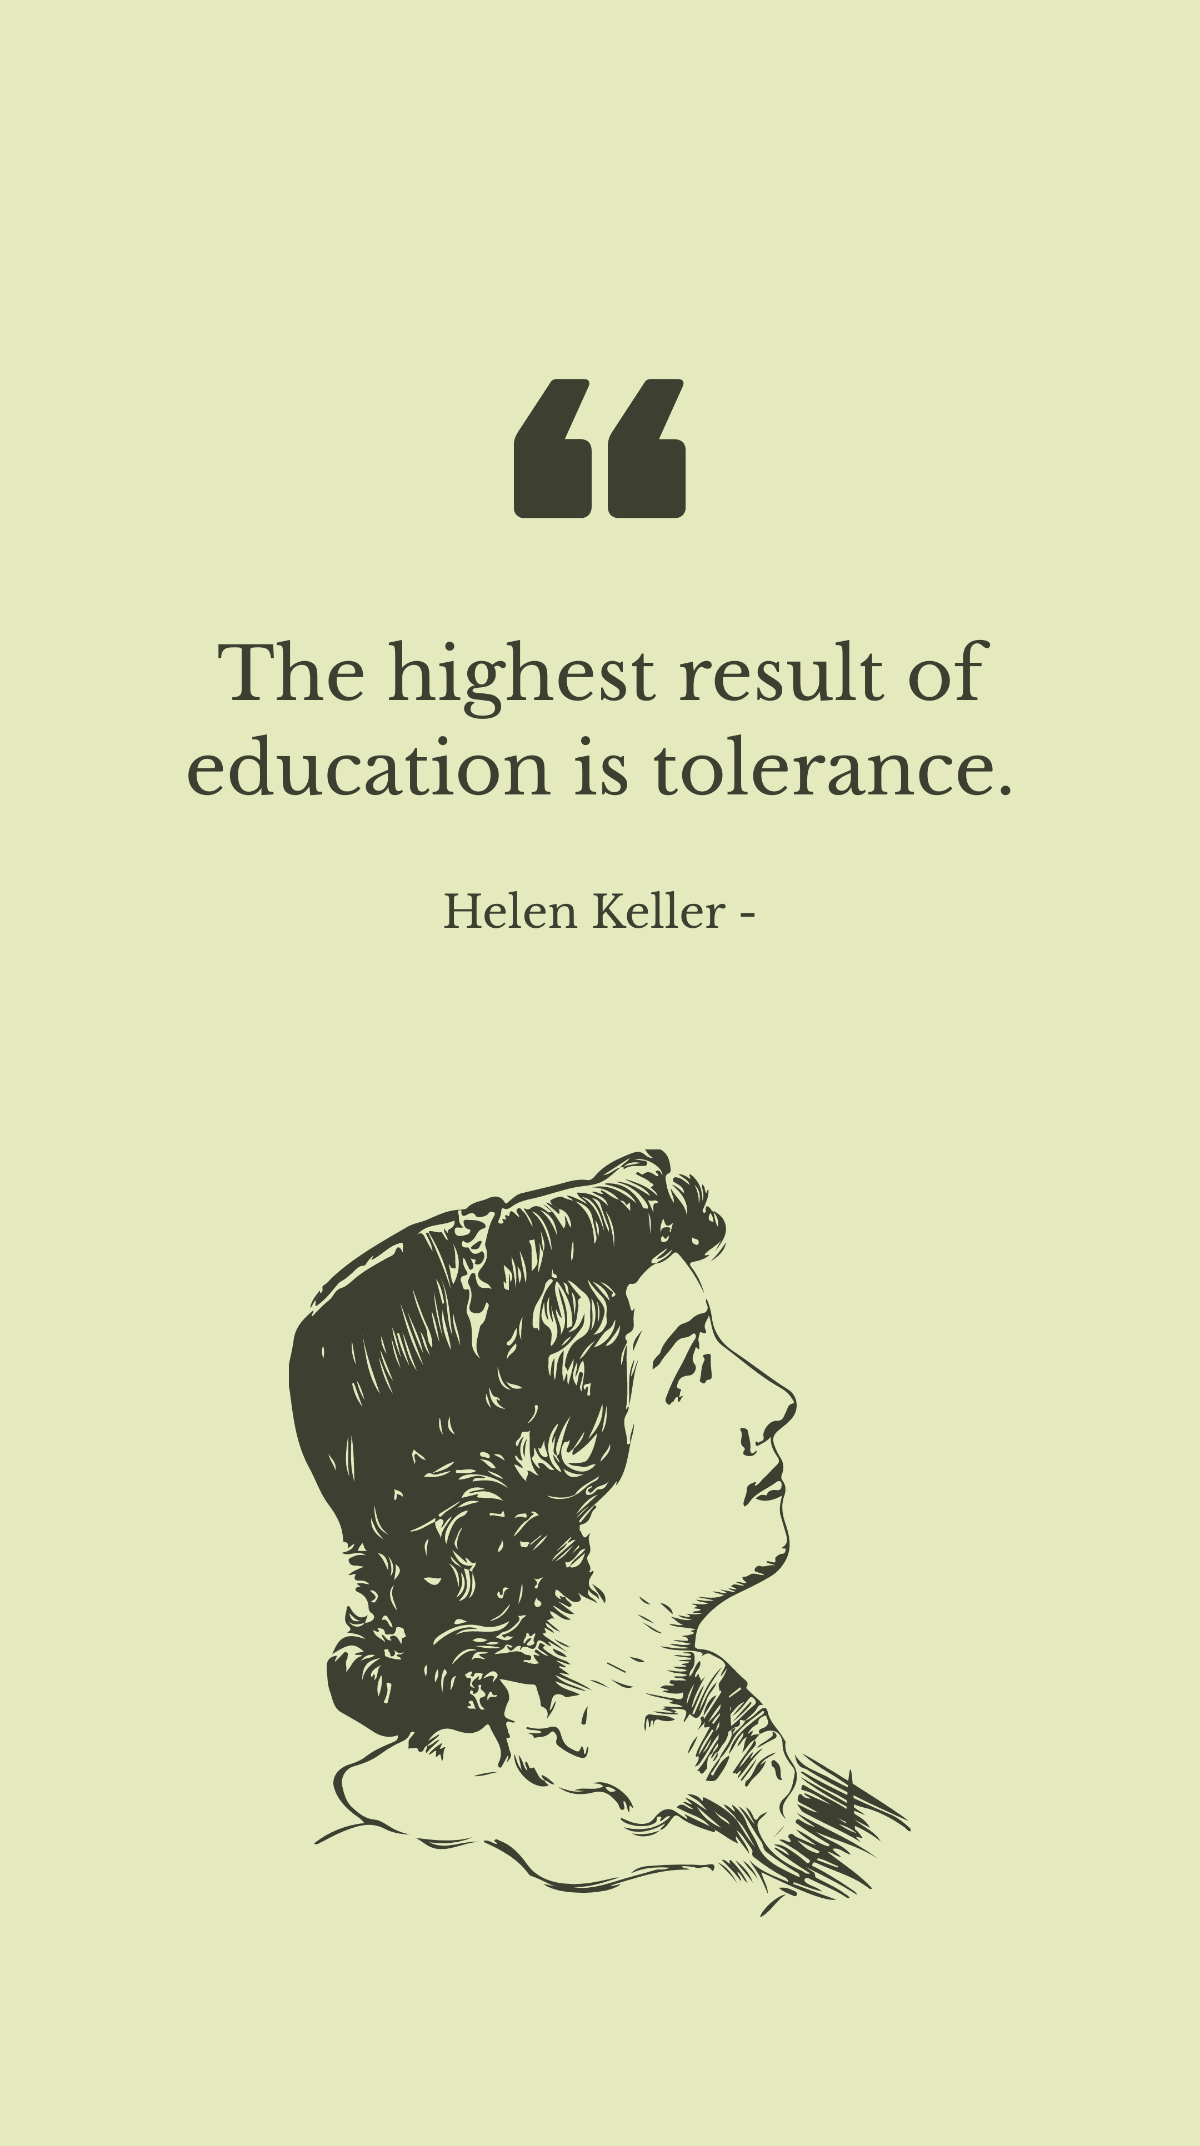 Helen Keller - The highest result of education is tolerance.